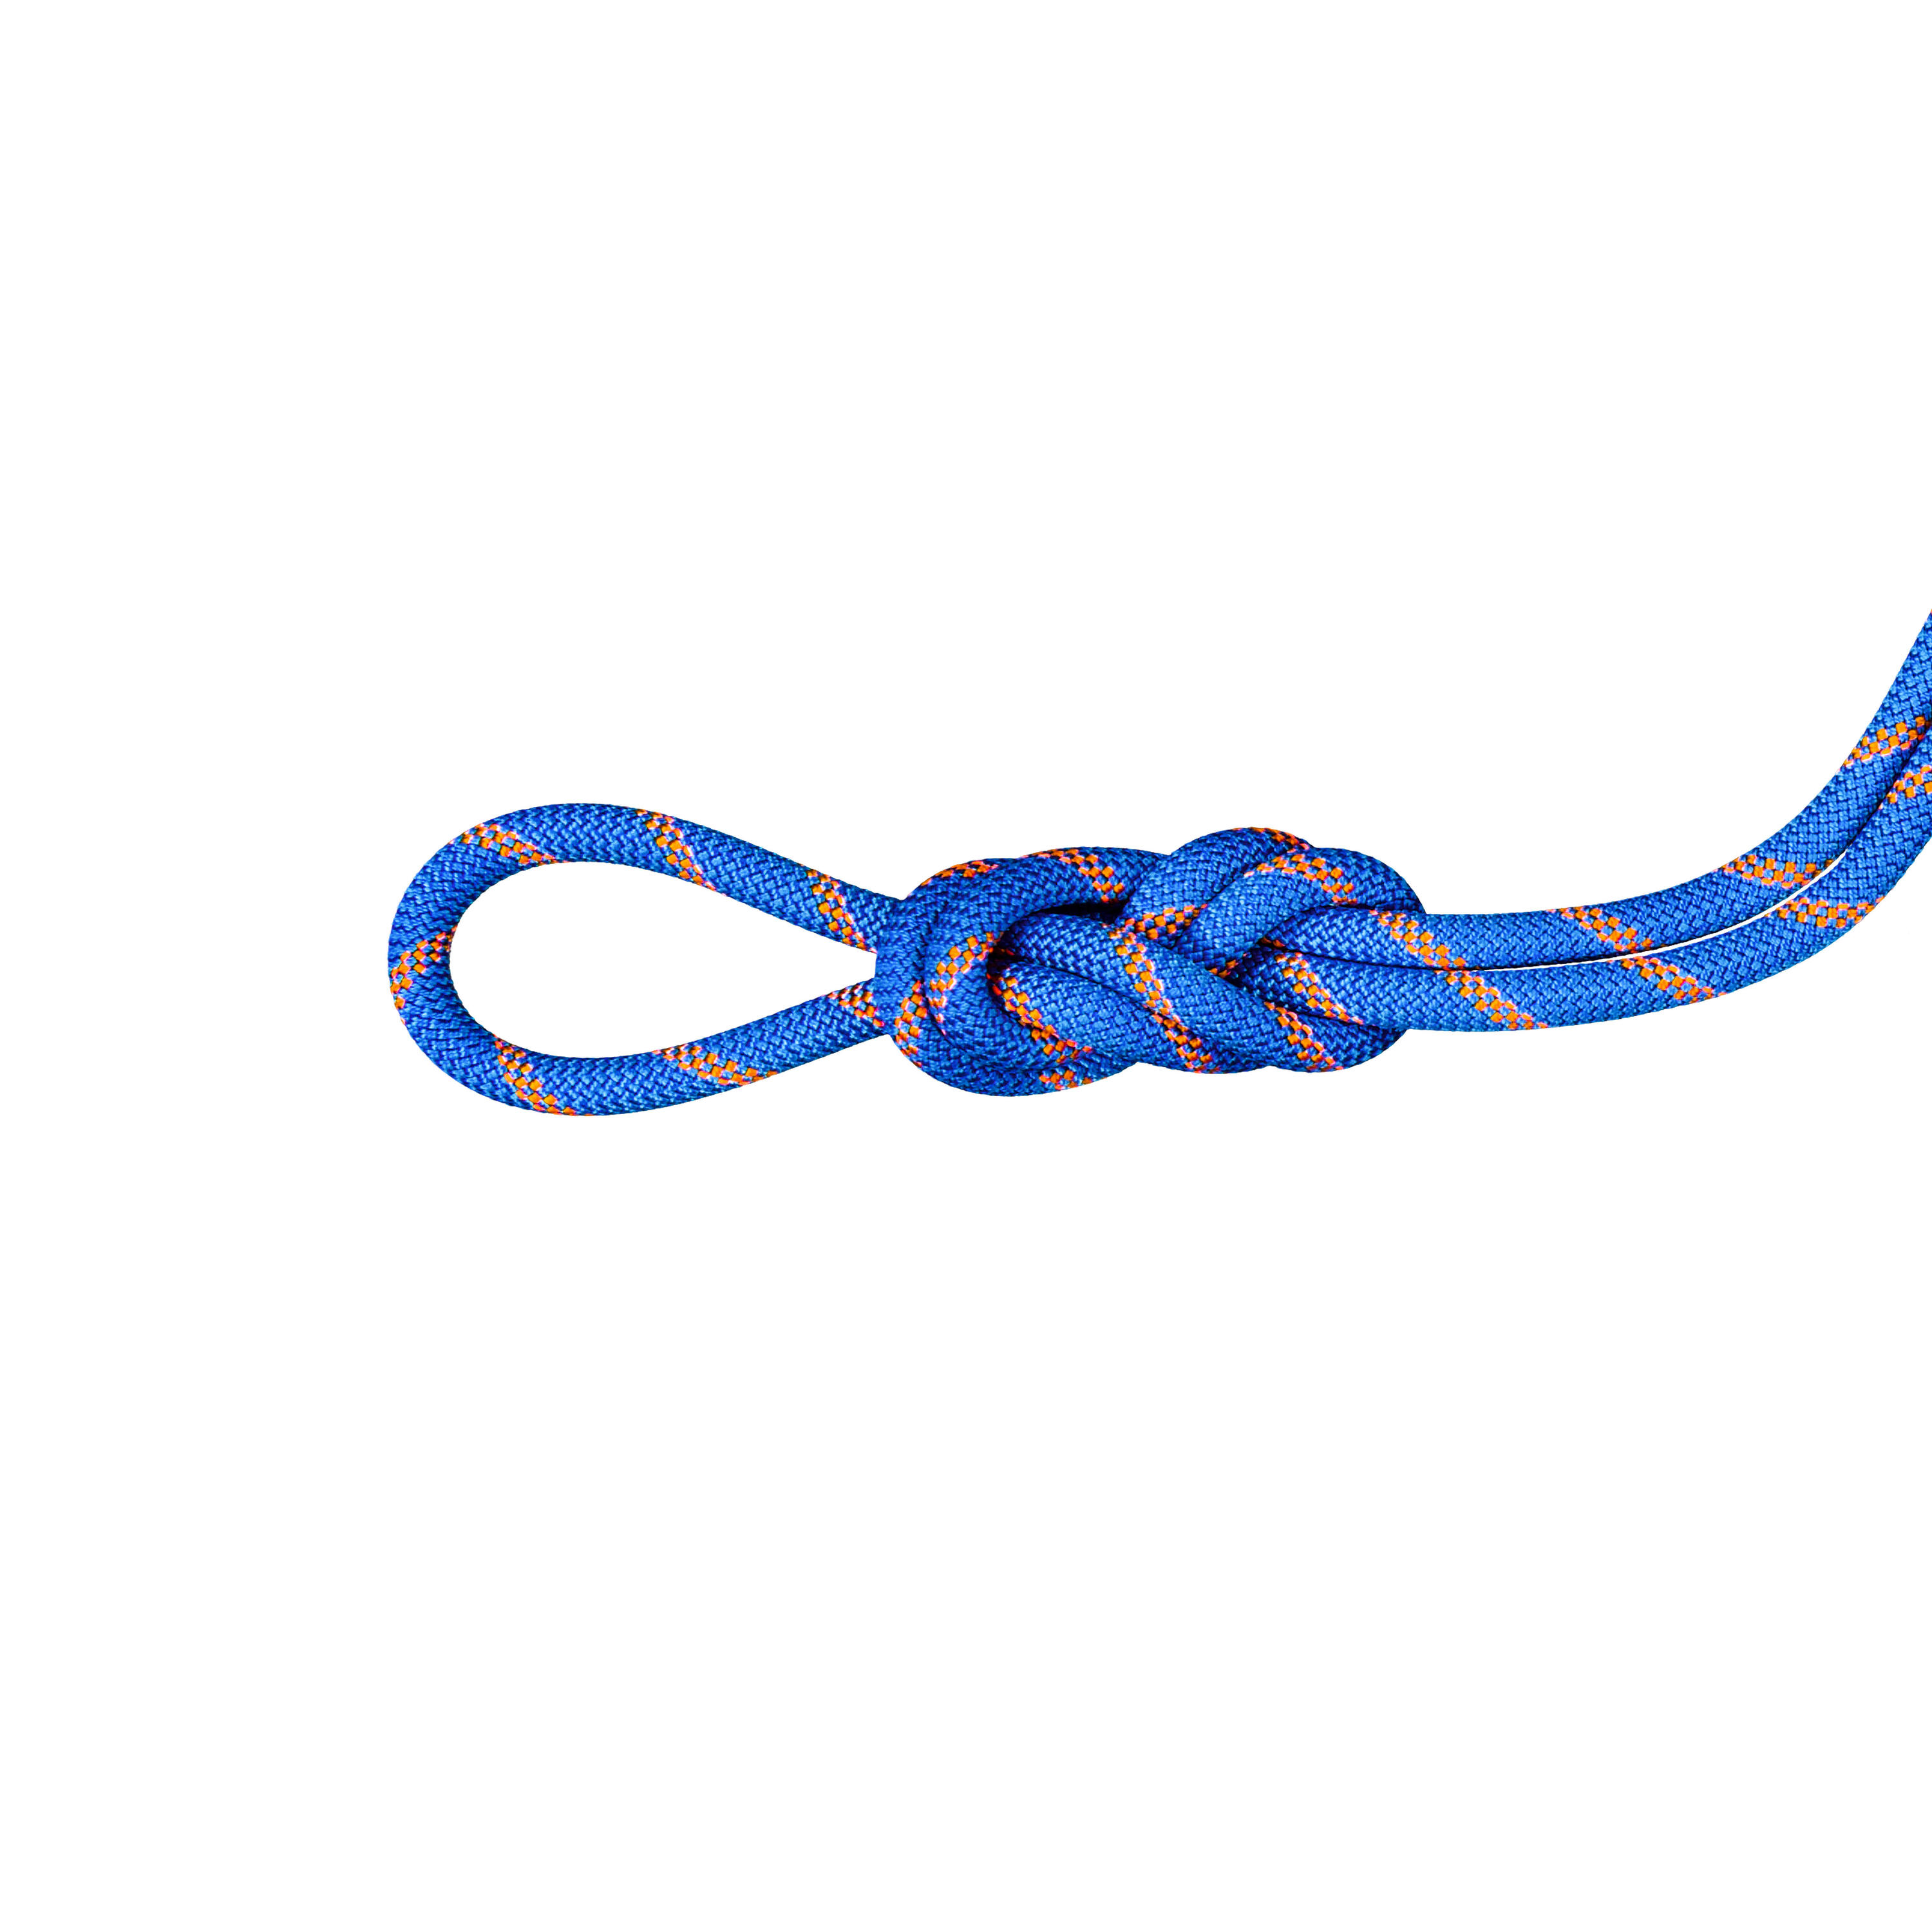 Alpine Sender Dry Triple-Rated Rope 9.0 mm x 40m - Blue 1/4